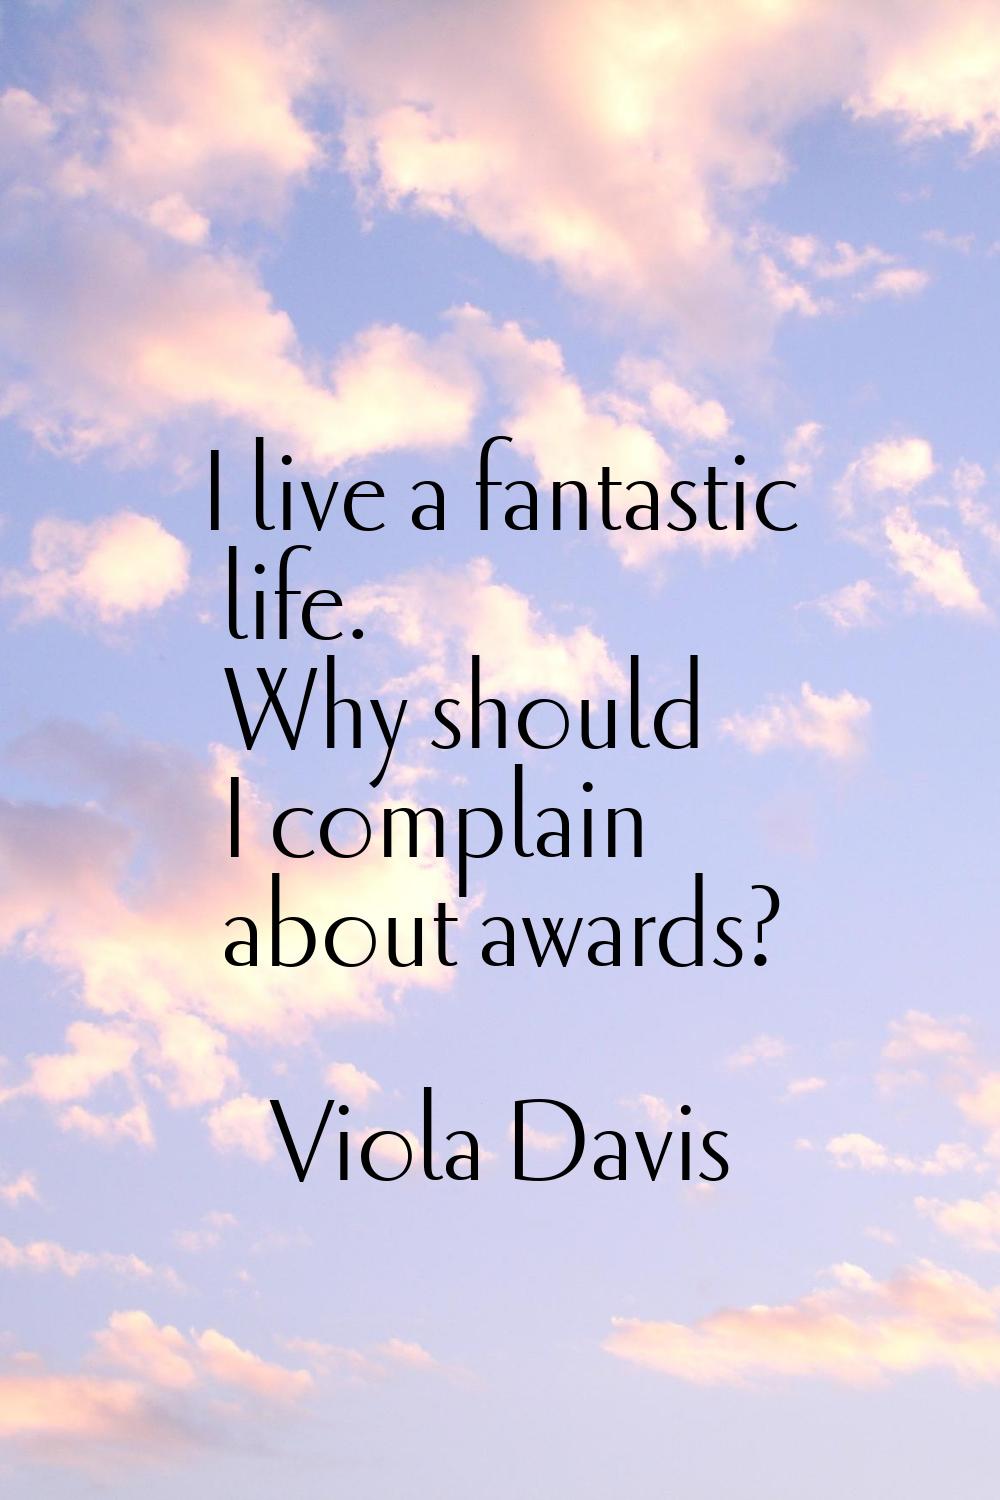 I live a fantastic life. Why should I complain about awards?